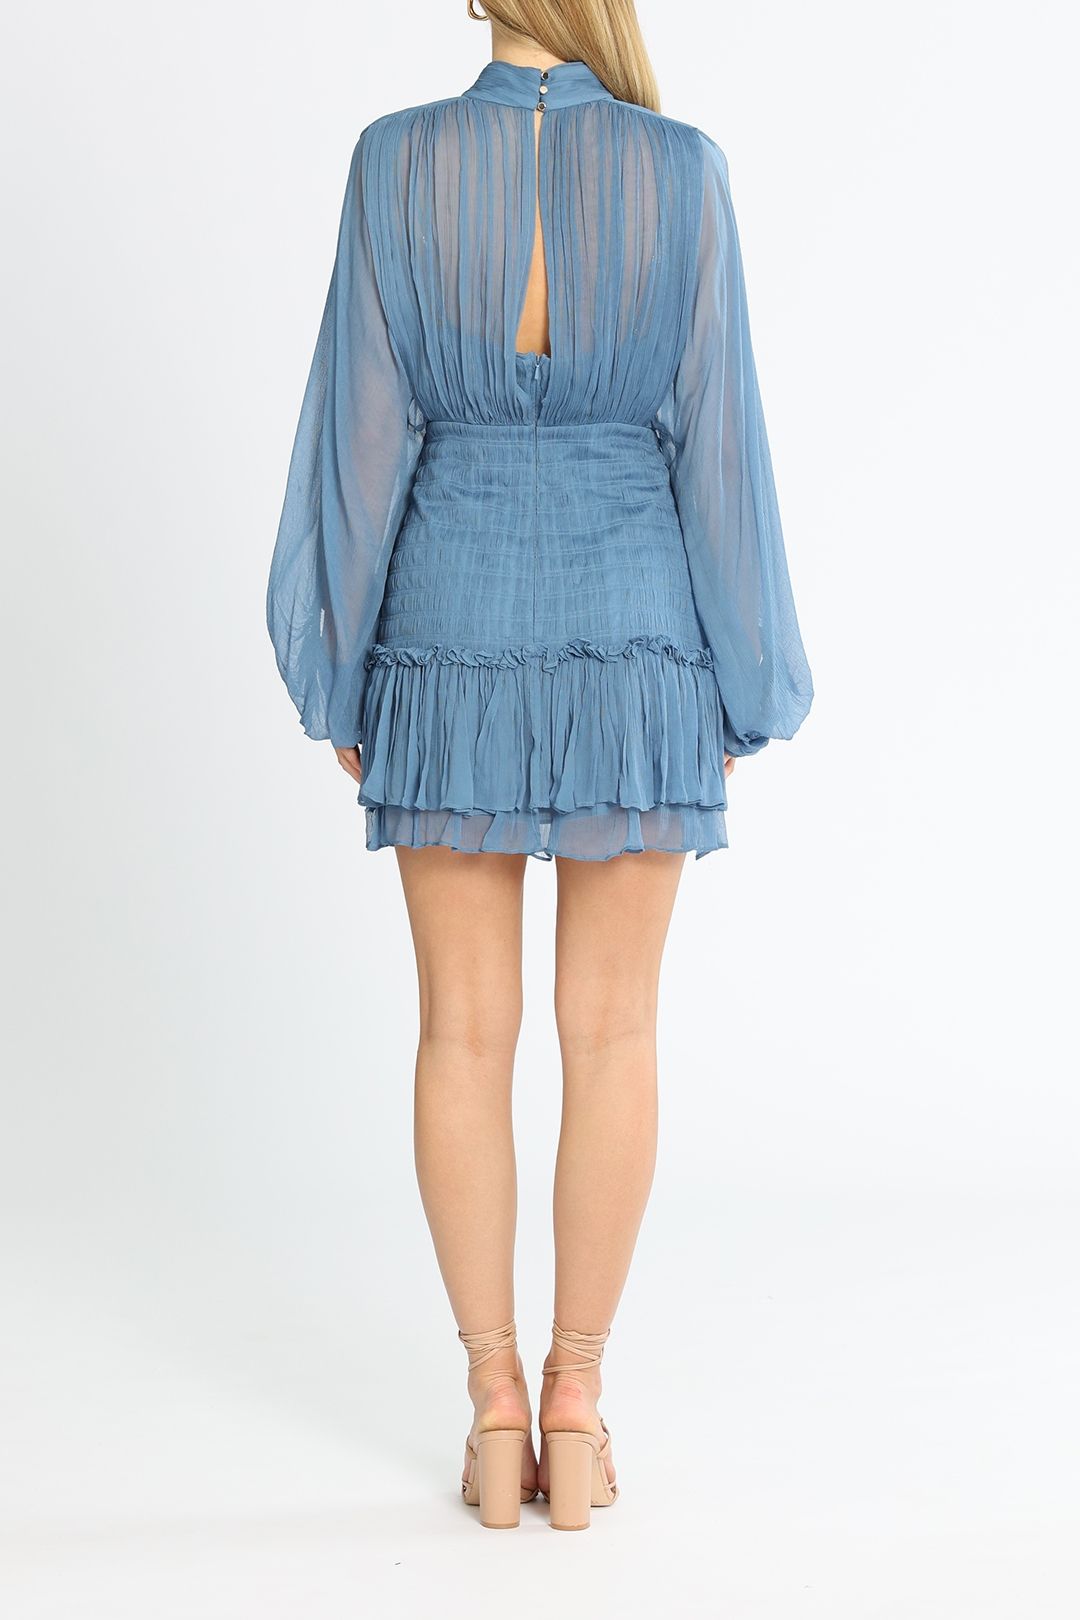 Shona Joy Noemi Ruched Mini Dress Blue Ruffles